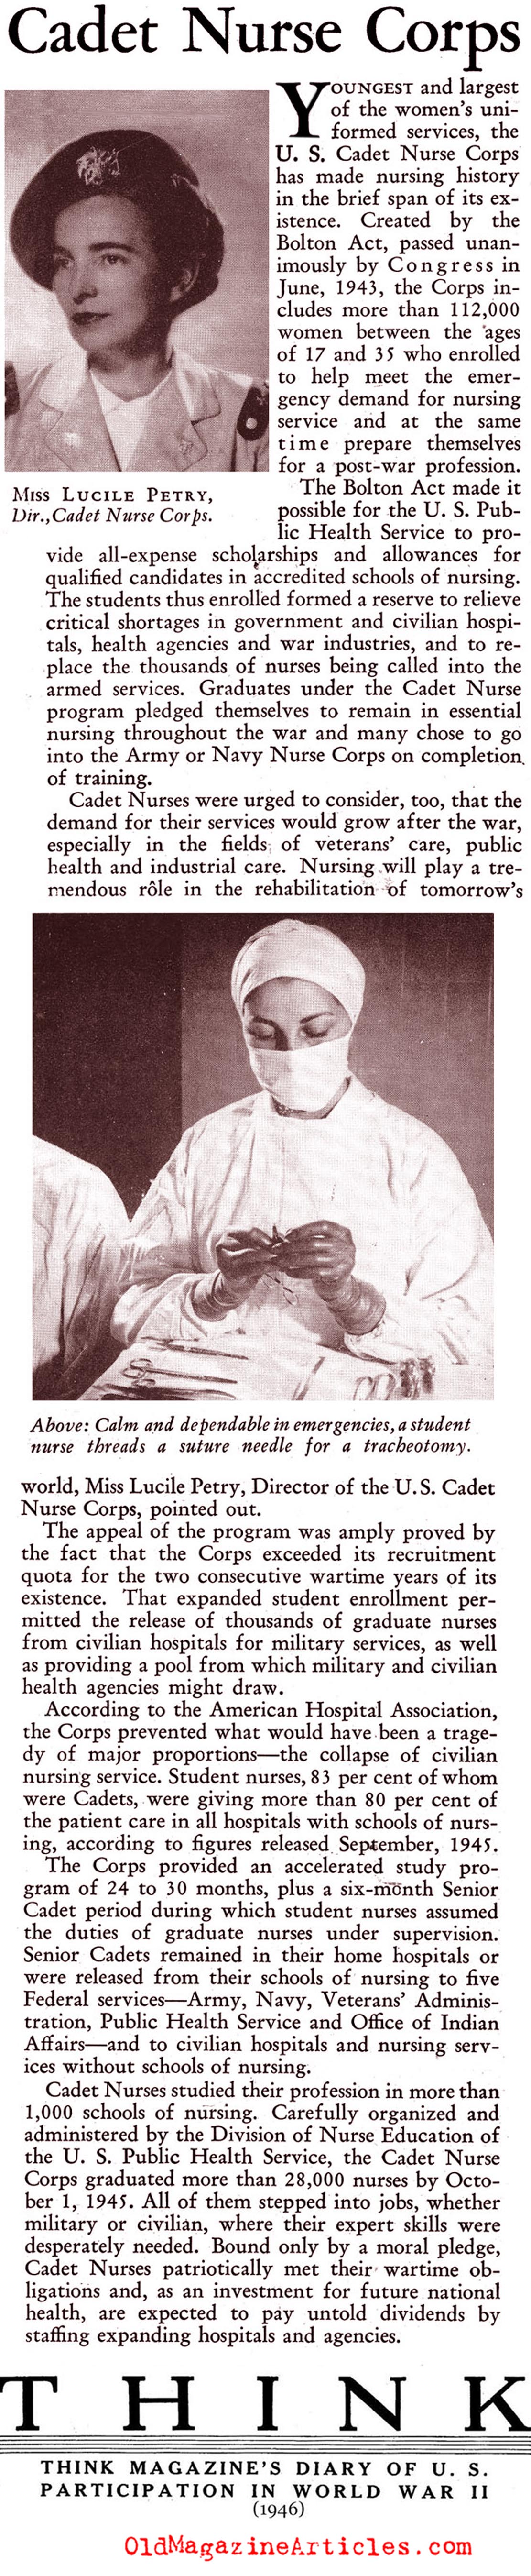 The Cadet Nurse Corps (Think Magazine, 1946)